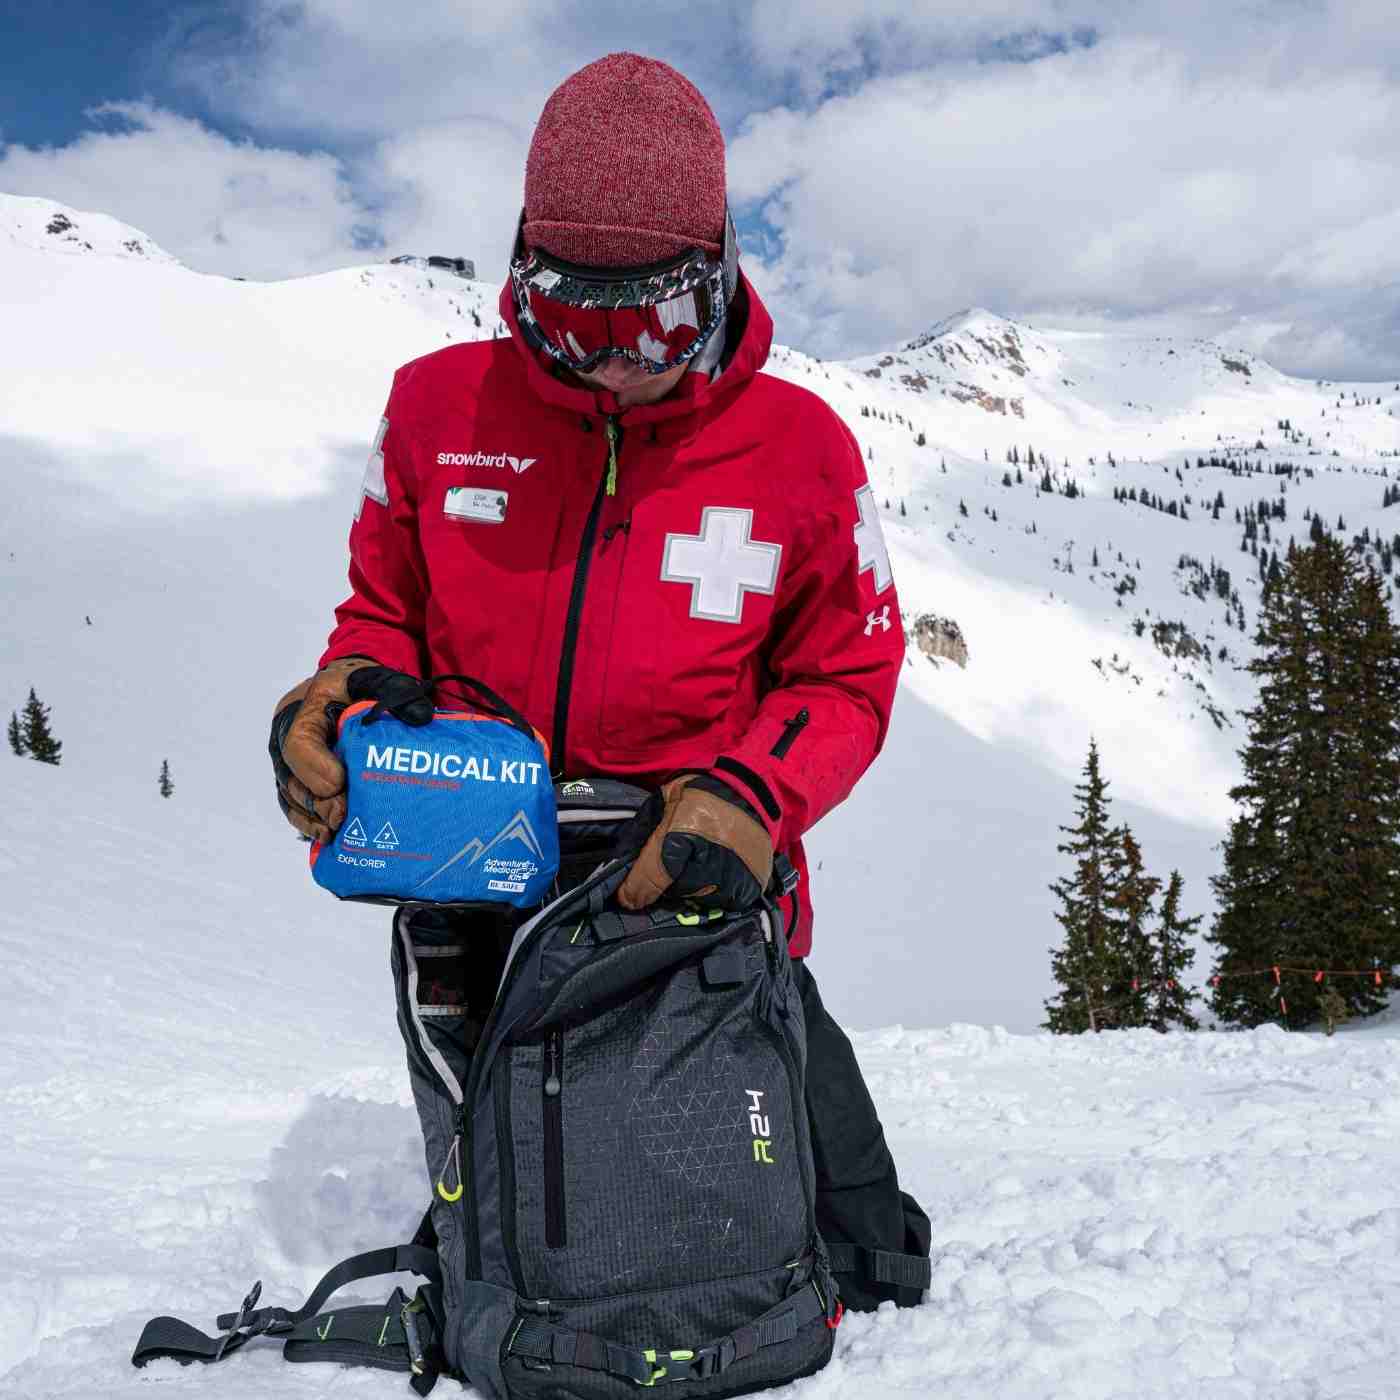 Mountain Series Medical Kit - Explorer Ski Patrol pulling kit from black backpack